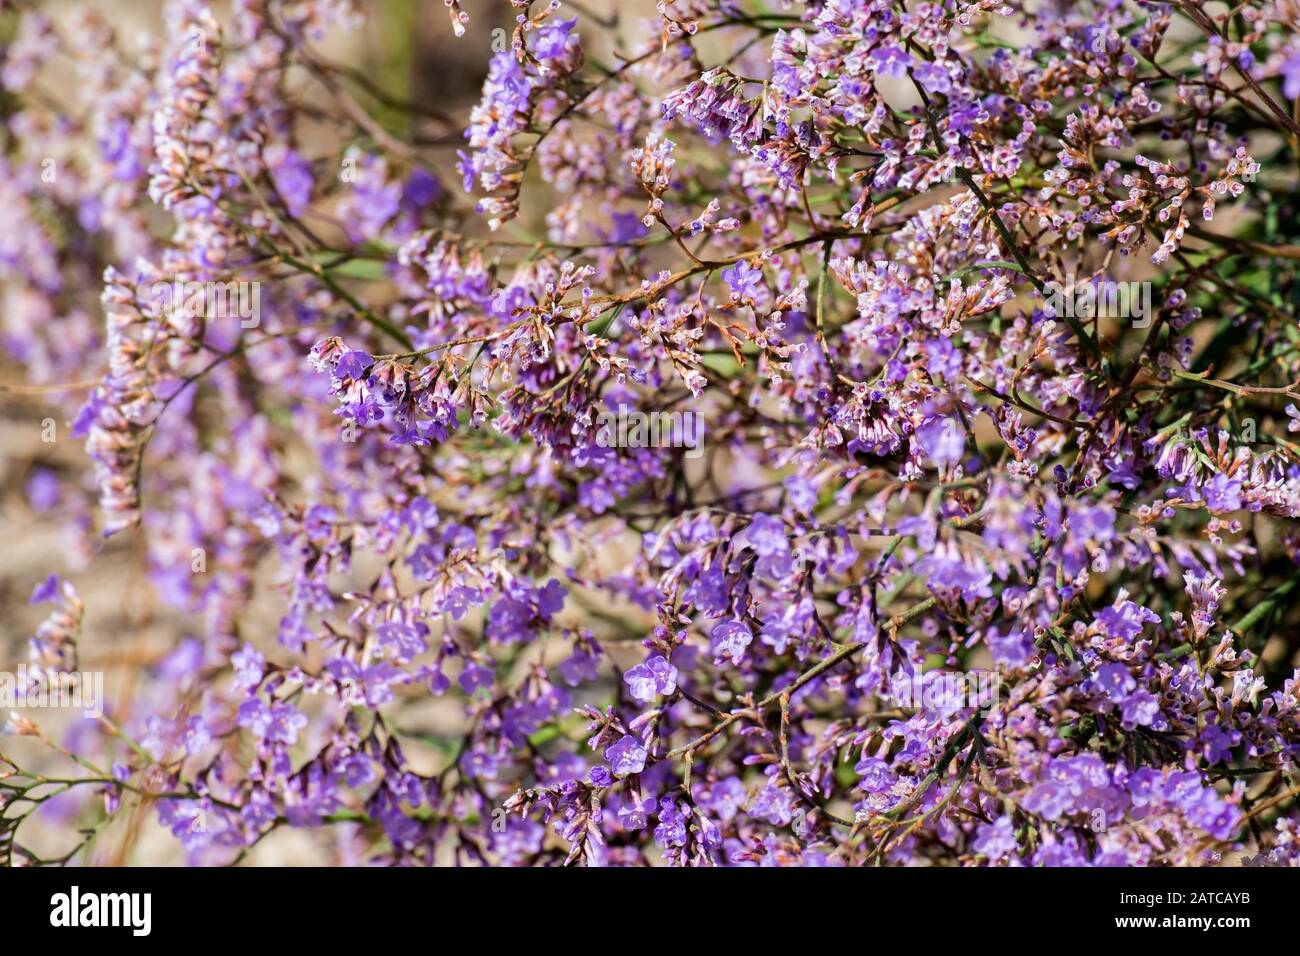 Purple flowers of caspia (Limonium gmelinii) Stock Photo